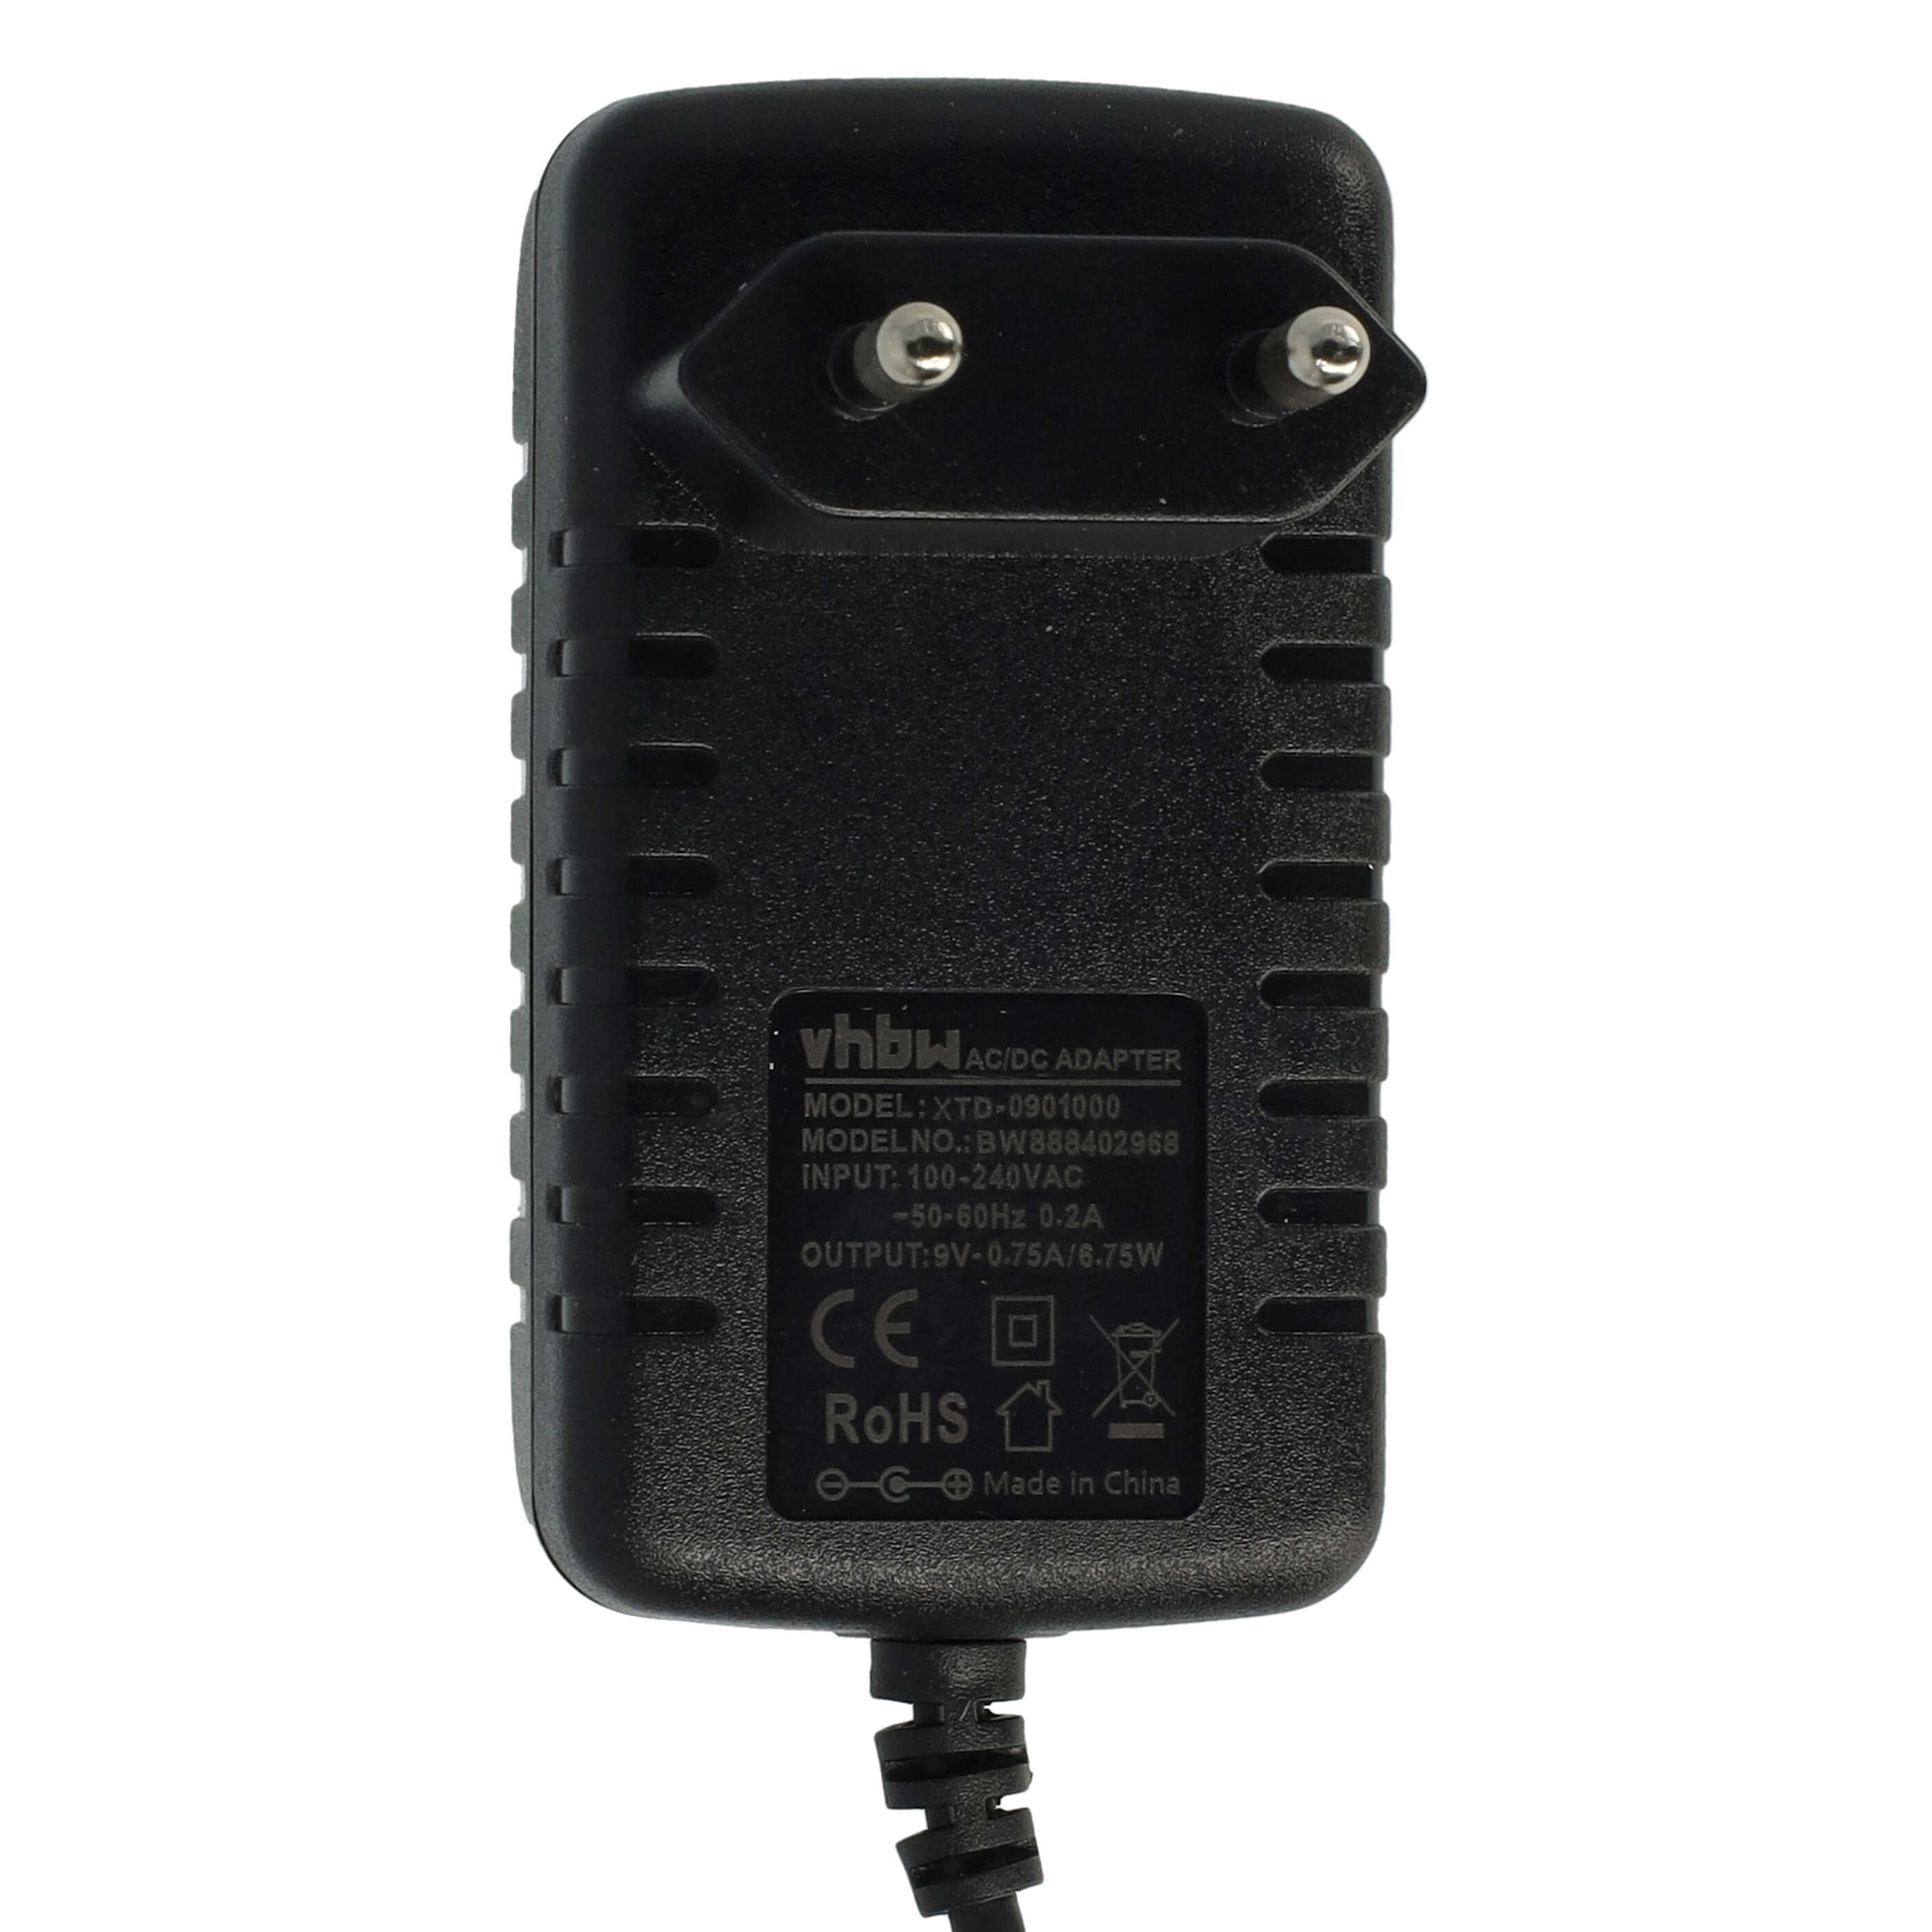 Mains Power Adapter replaces Panasonic KX-A239CE for Panasonic Landline Telephone, Home Telephone - 140 cm